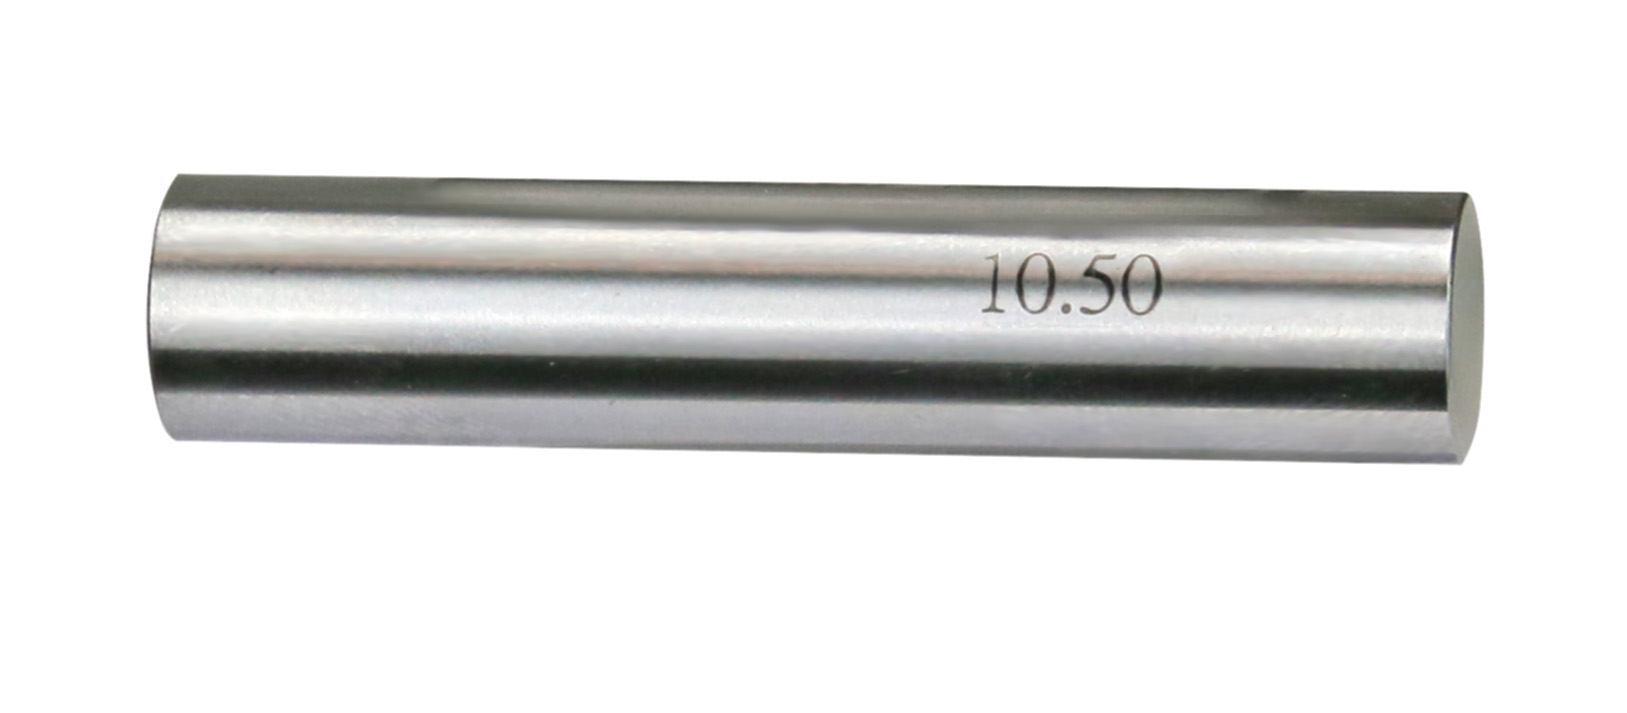 Single pin gauge Ø 11,61 mm | Messwelt